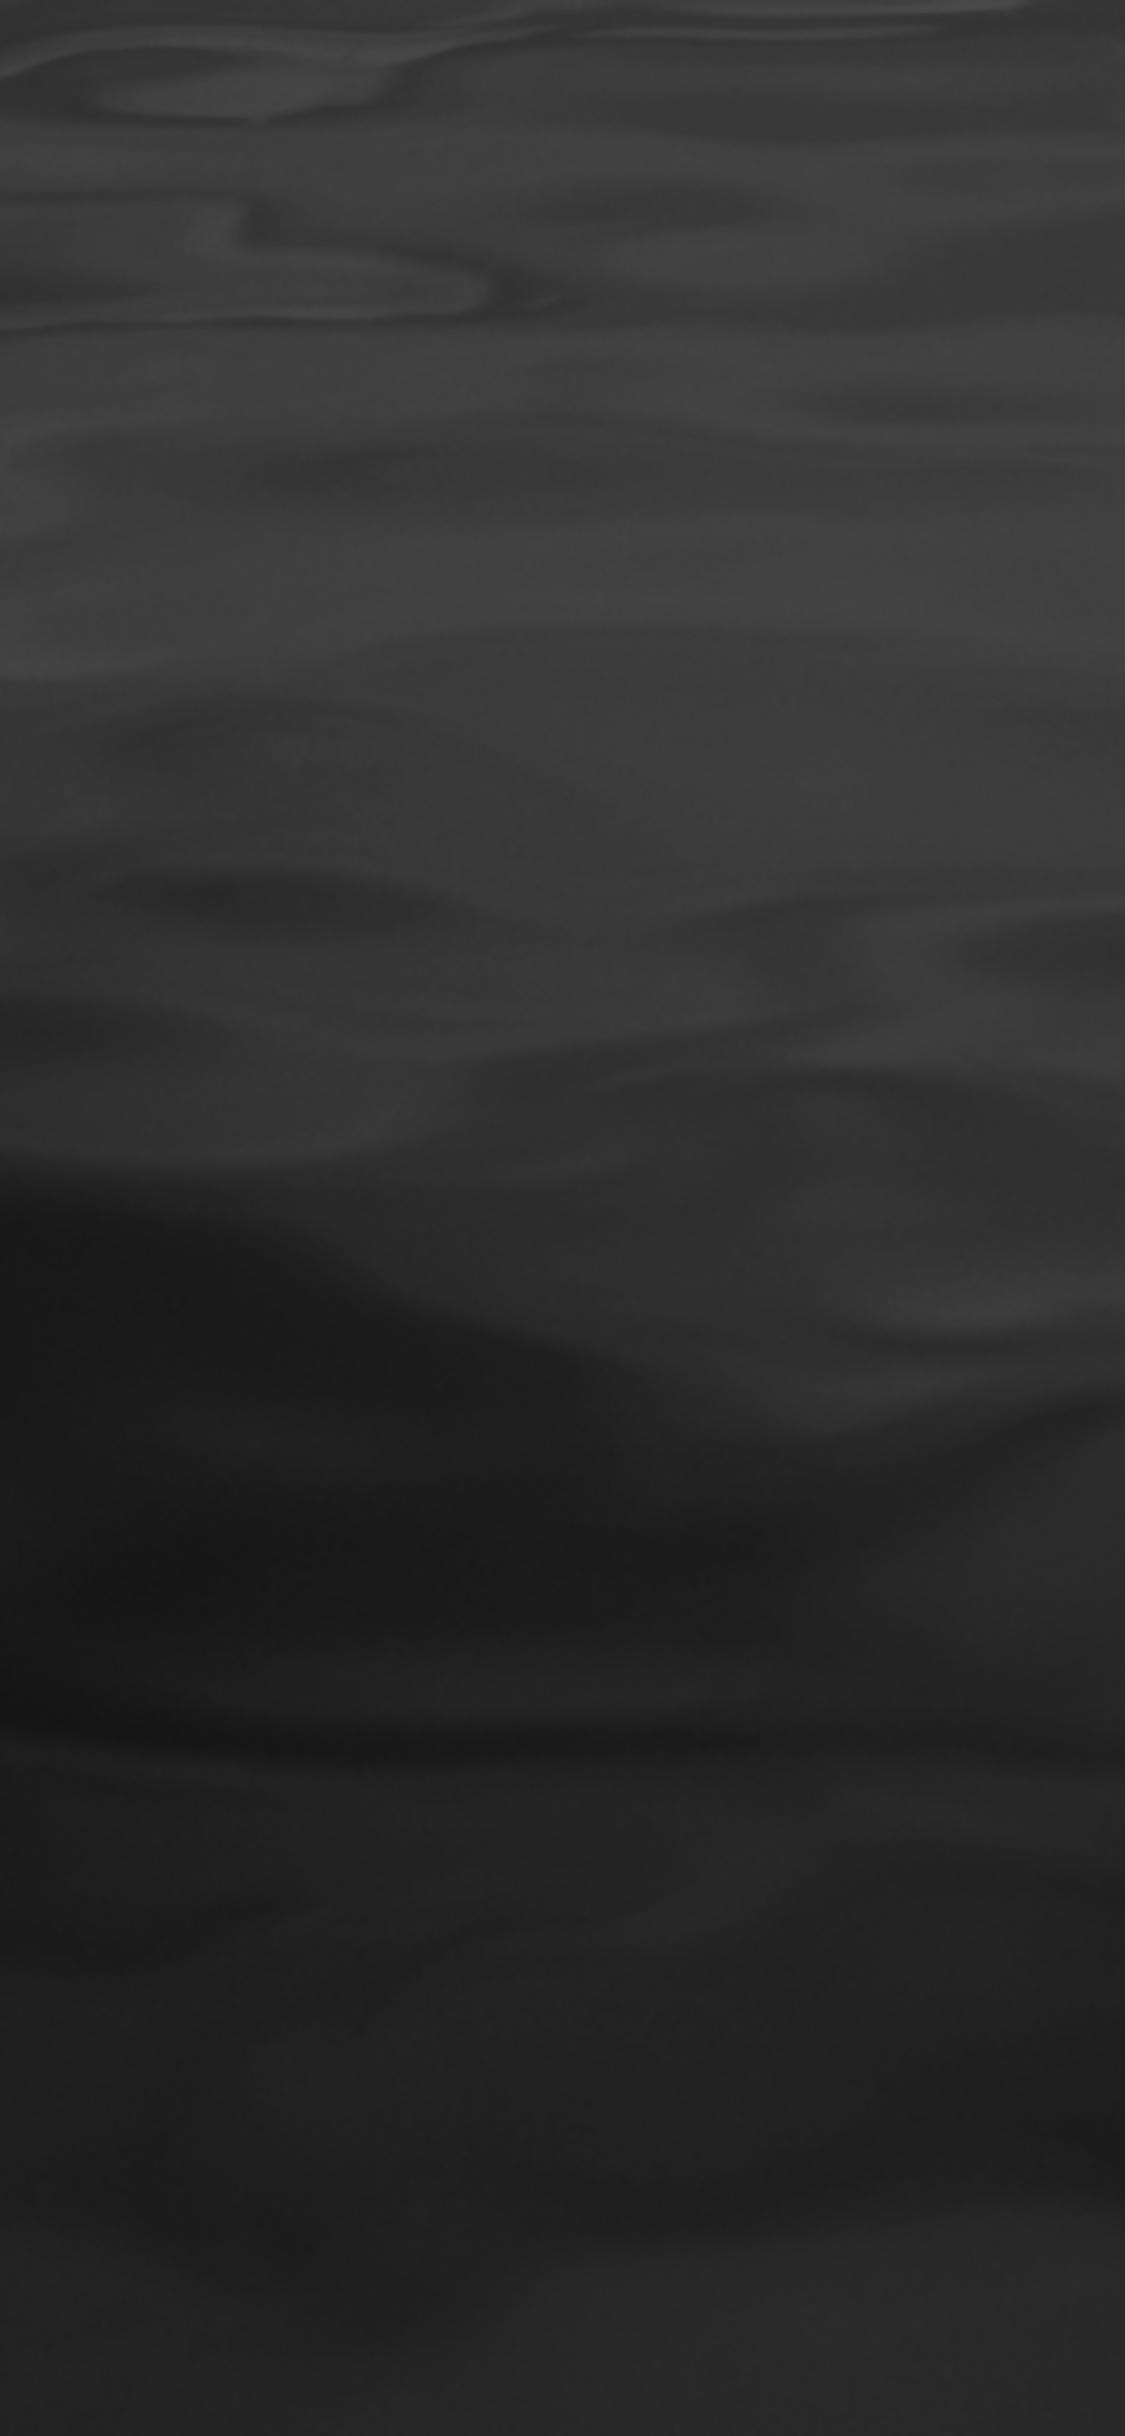 iPhone X wallpaper. calm water bw dark wave pattern